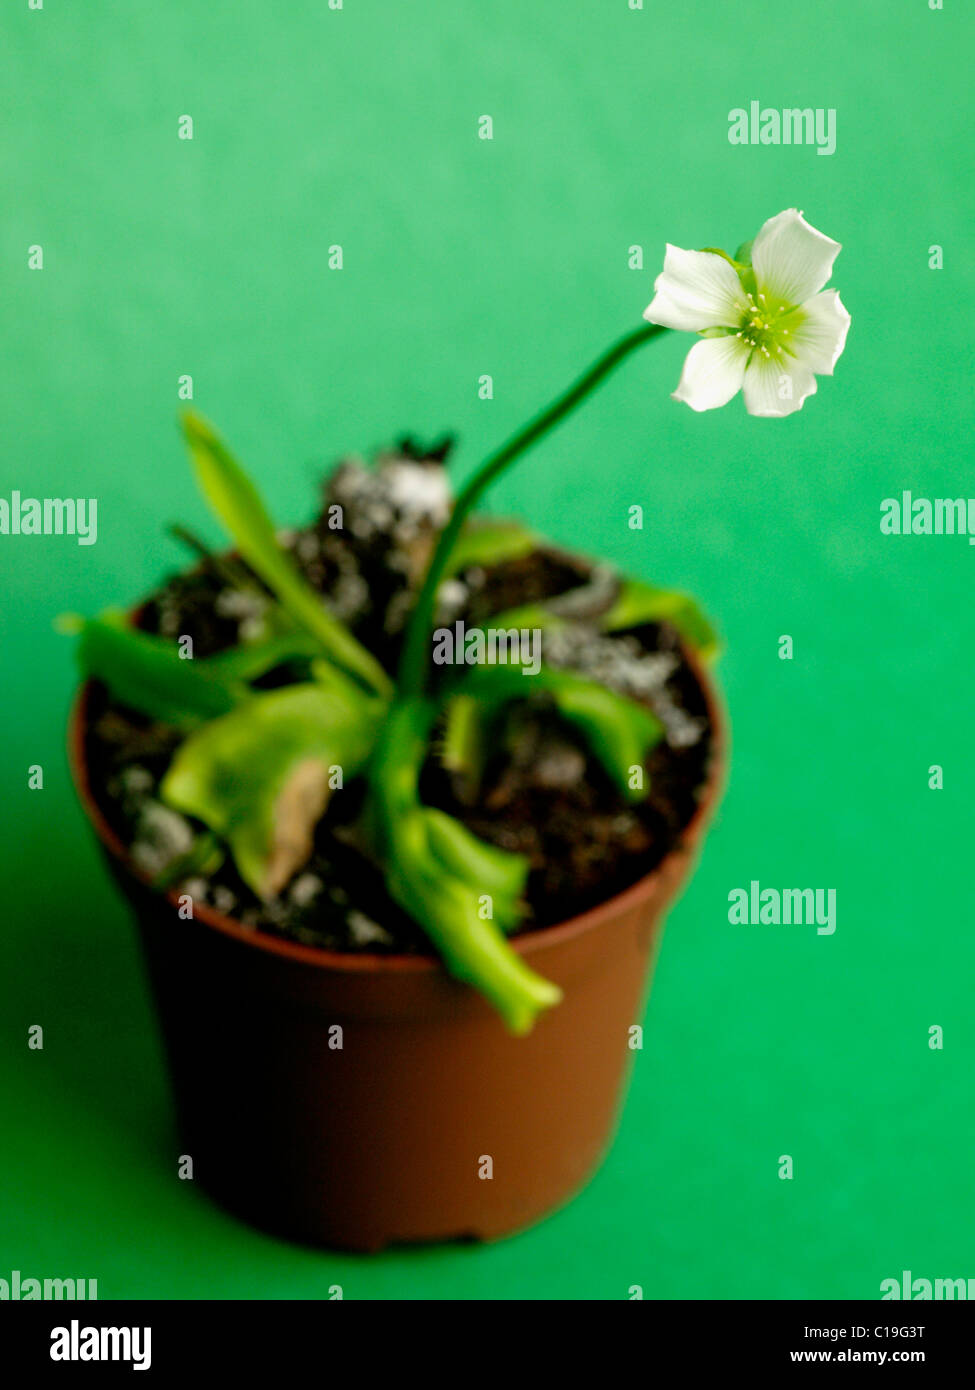 Venus flytrap flower Stock Photo